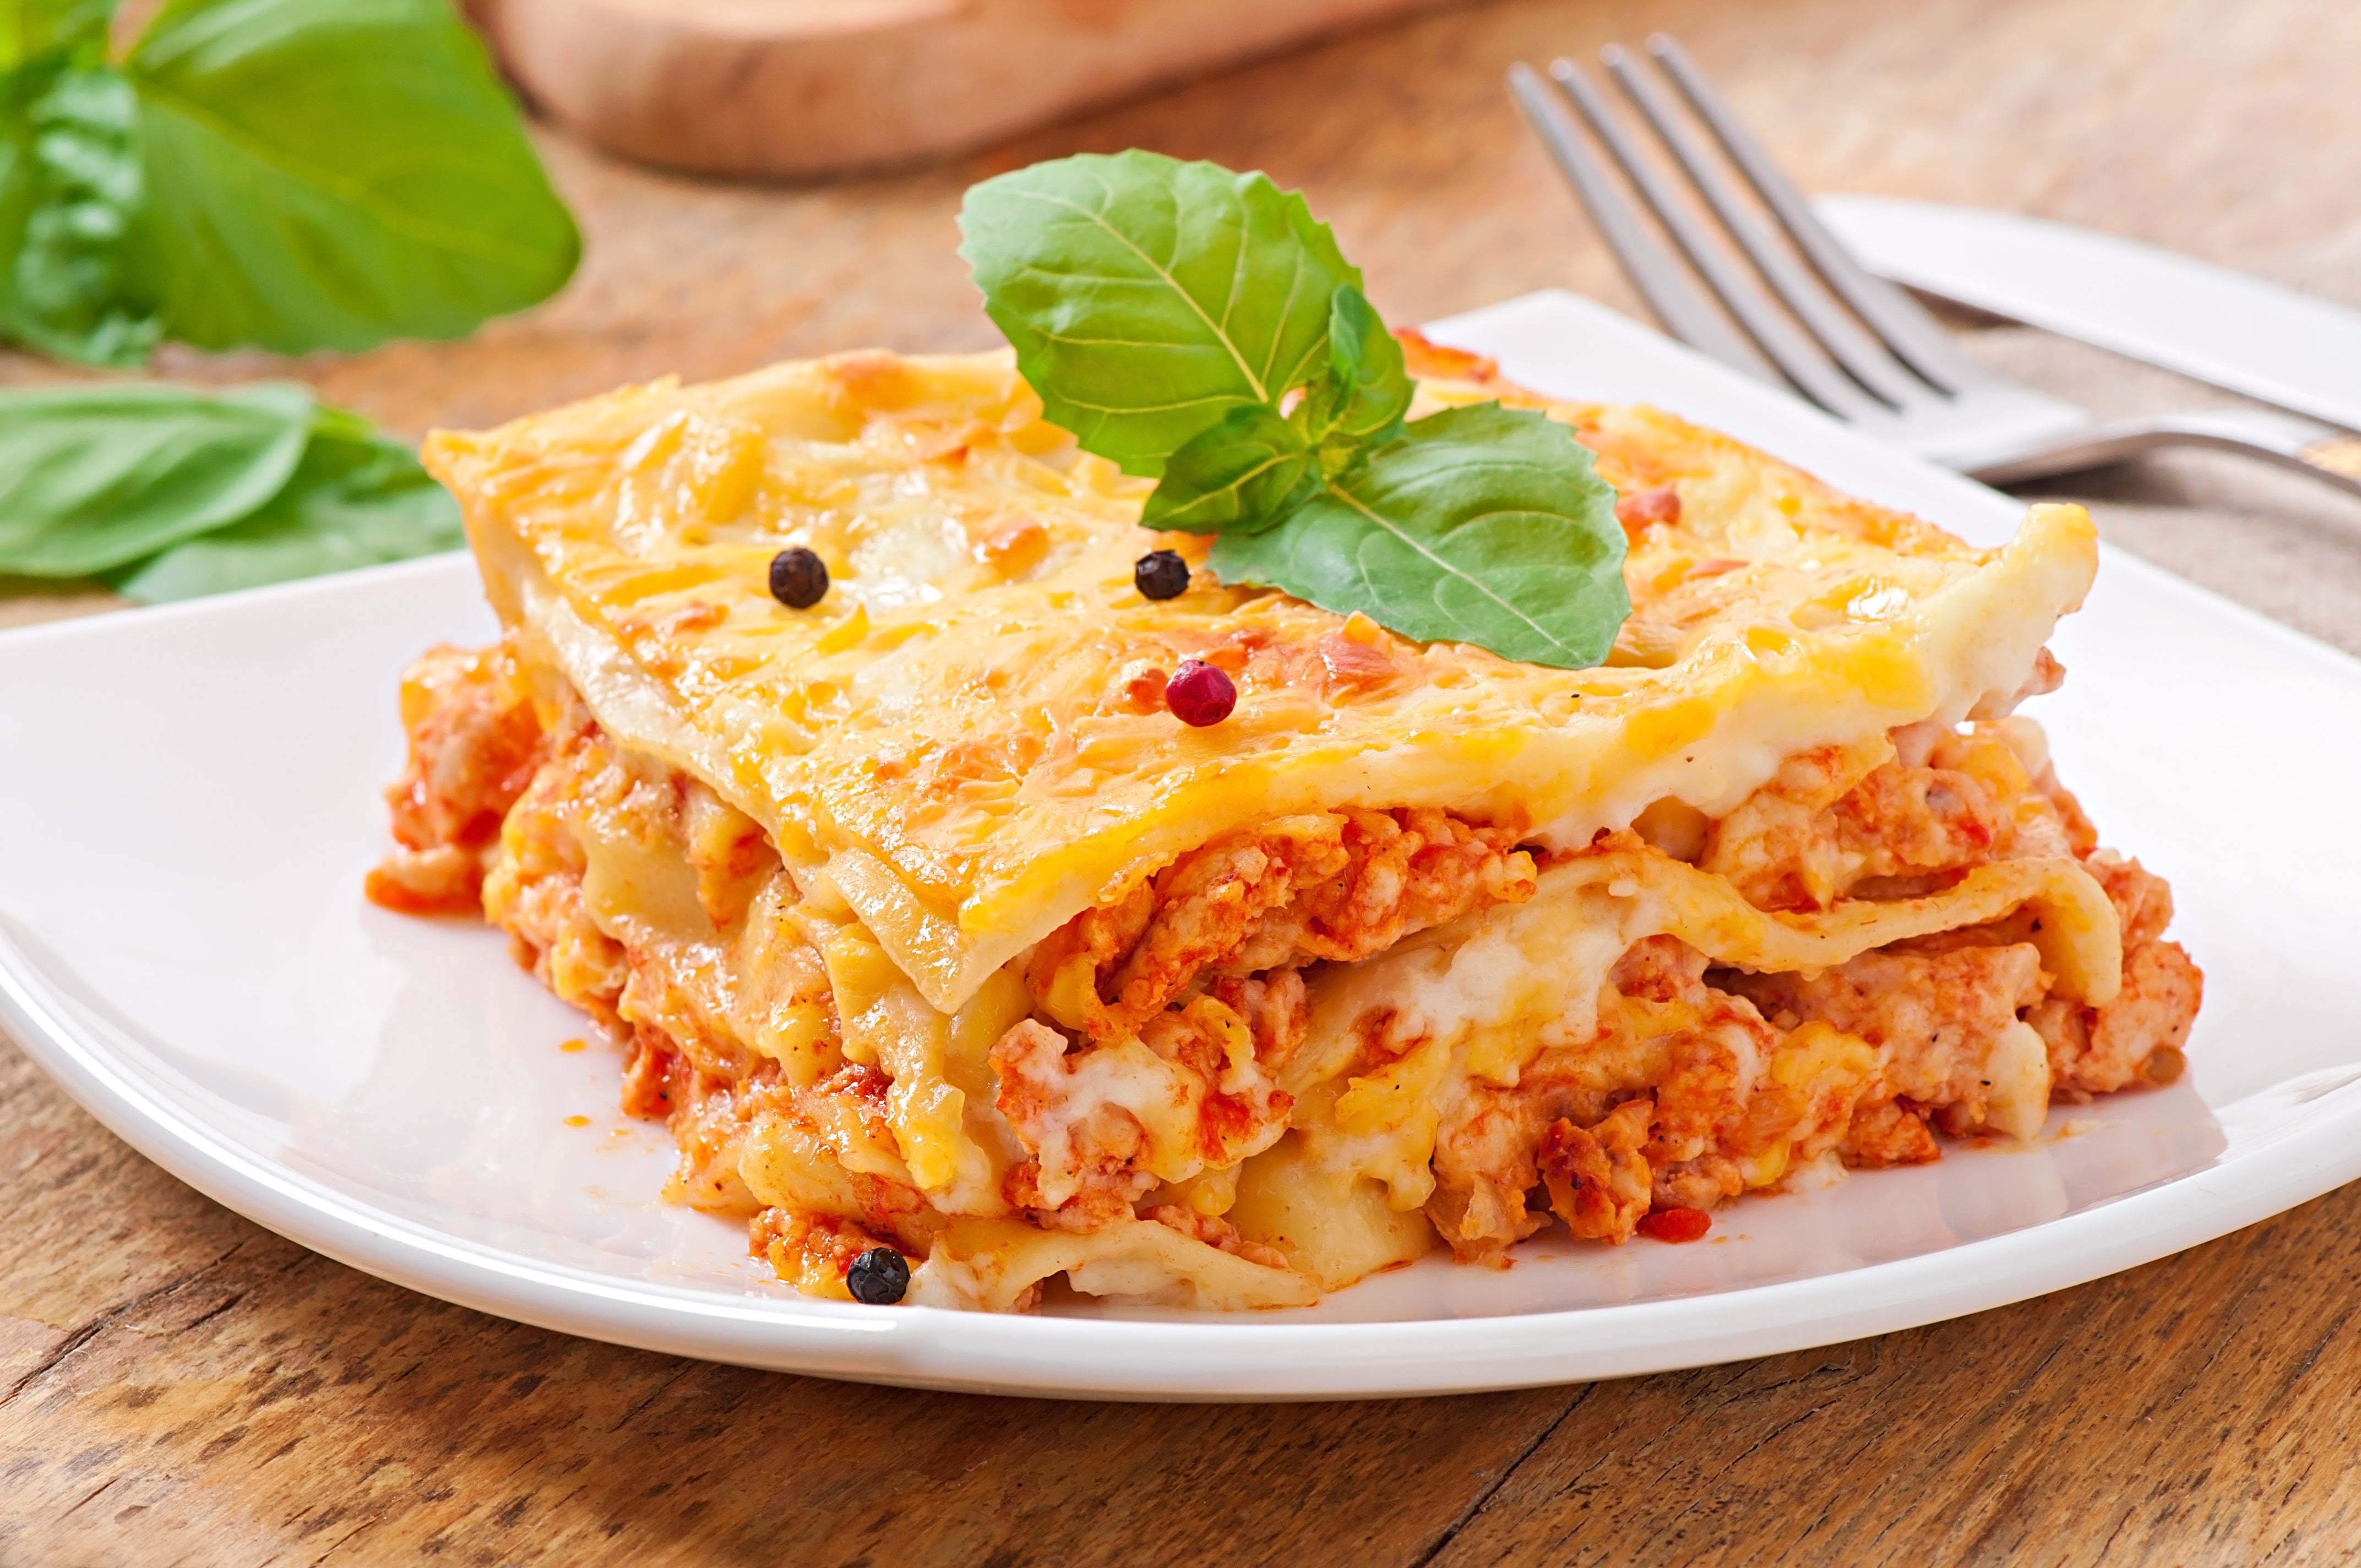 Receta Lasagna de Carne | Recetas Nestlé